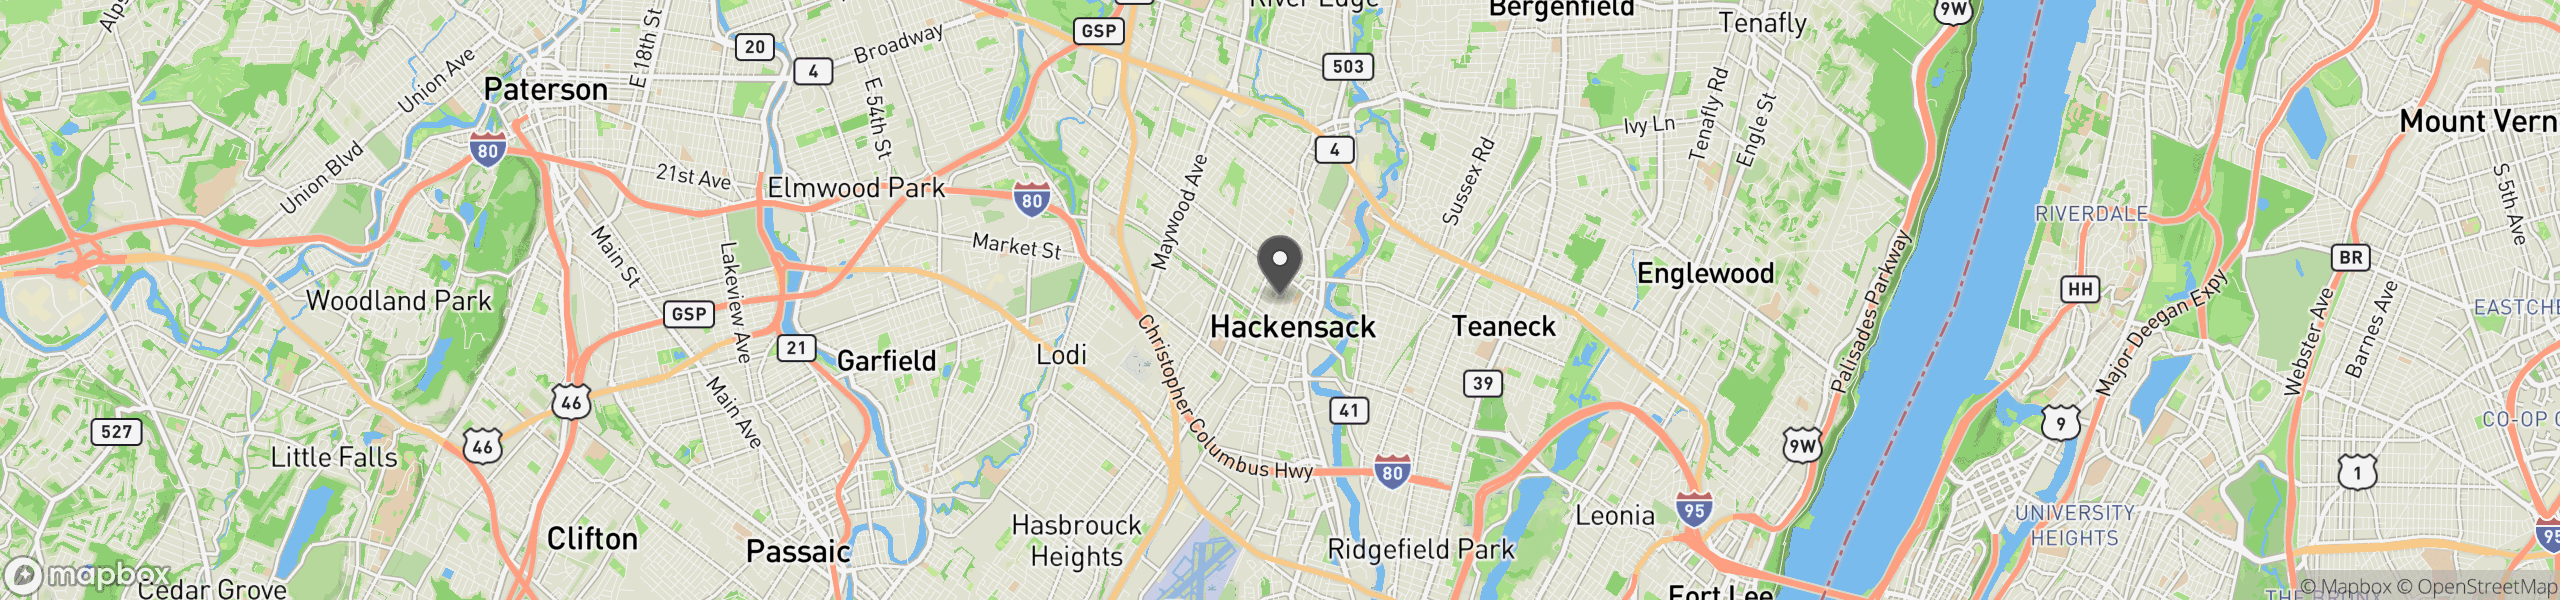 Hackensack, NJ